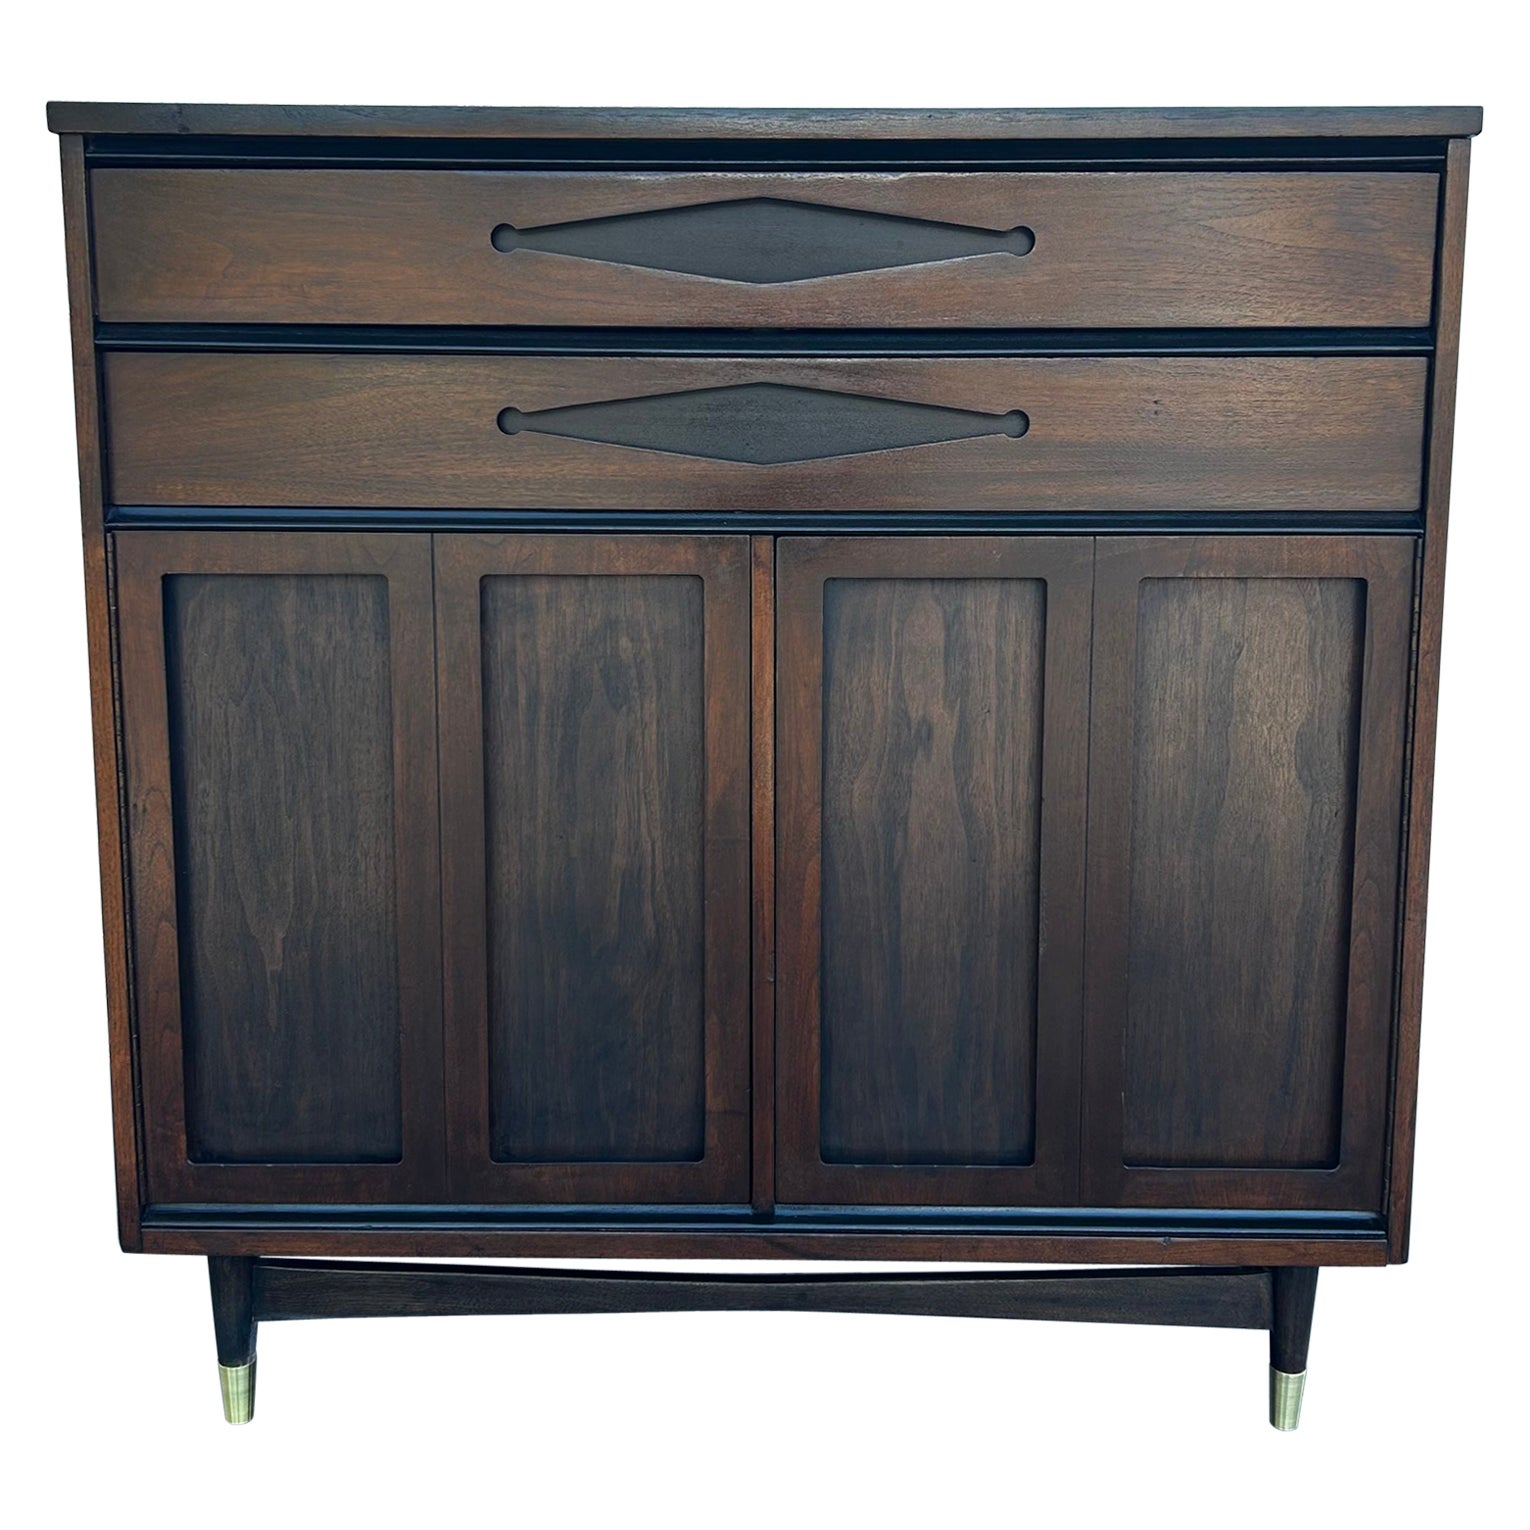 Vintage Mid-Century Modern Cabinet Dresser in Black and Dark Wood For Sale